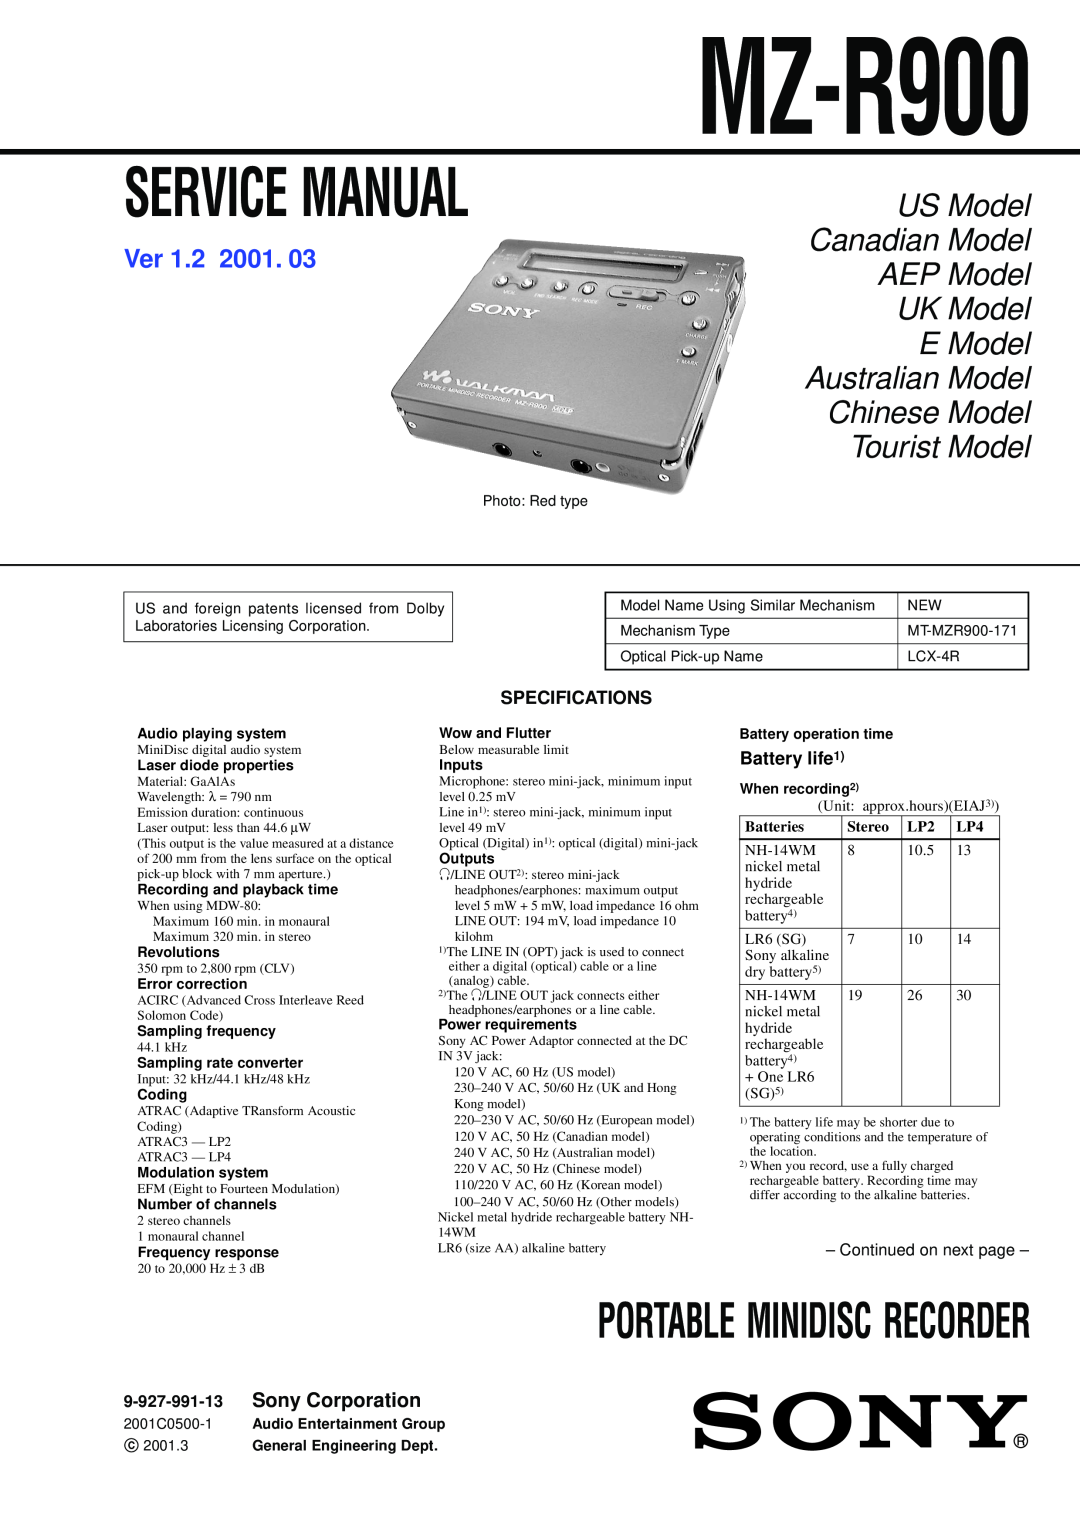 Sony MZ-R900 service manual Portable Minidisc Recorder, US Model, Canadian Model, AEP Model, UK Model, E Model, Ver 